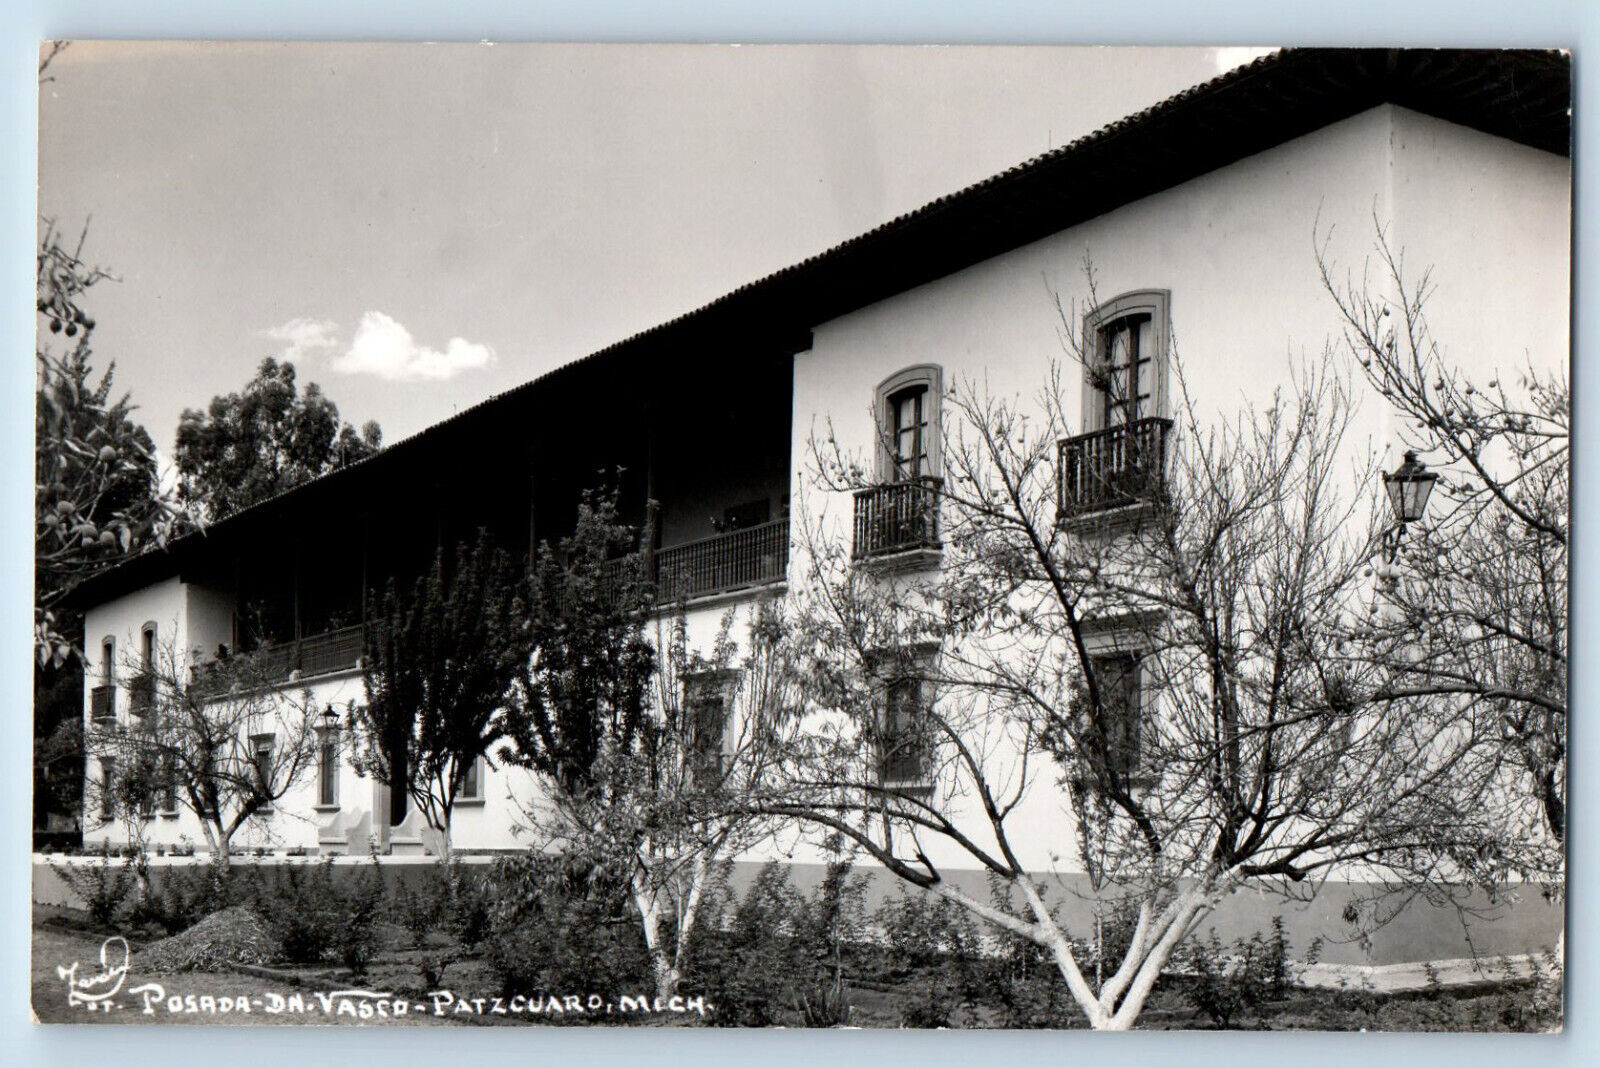 Patzcuaro Michoacán Mexico Postcard Posada DN Vasco c1950's RPPC Photo